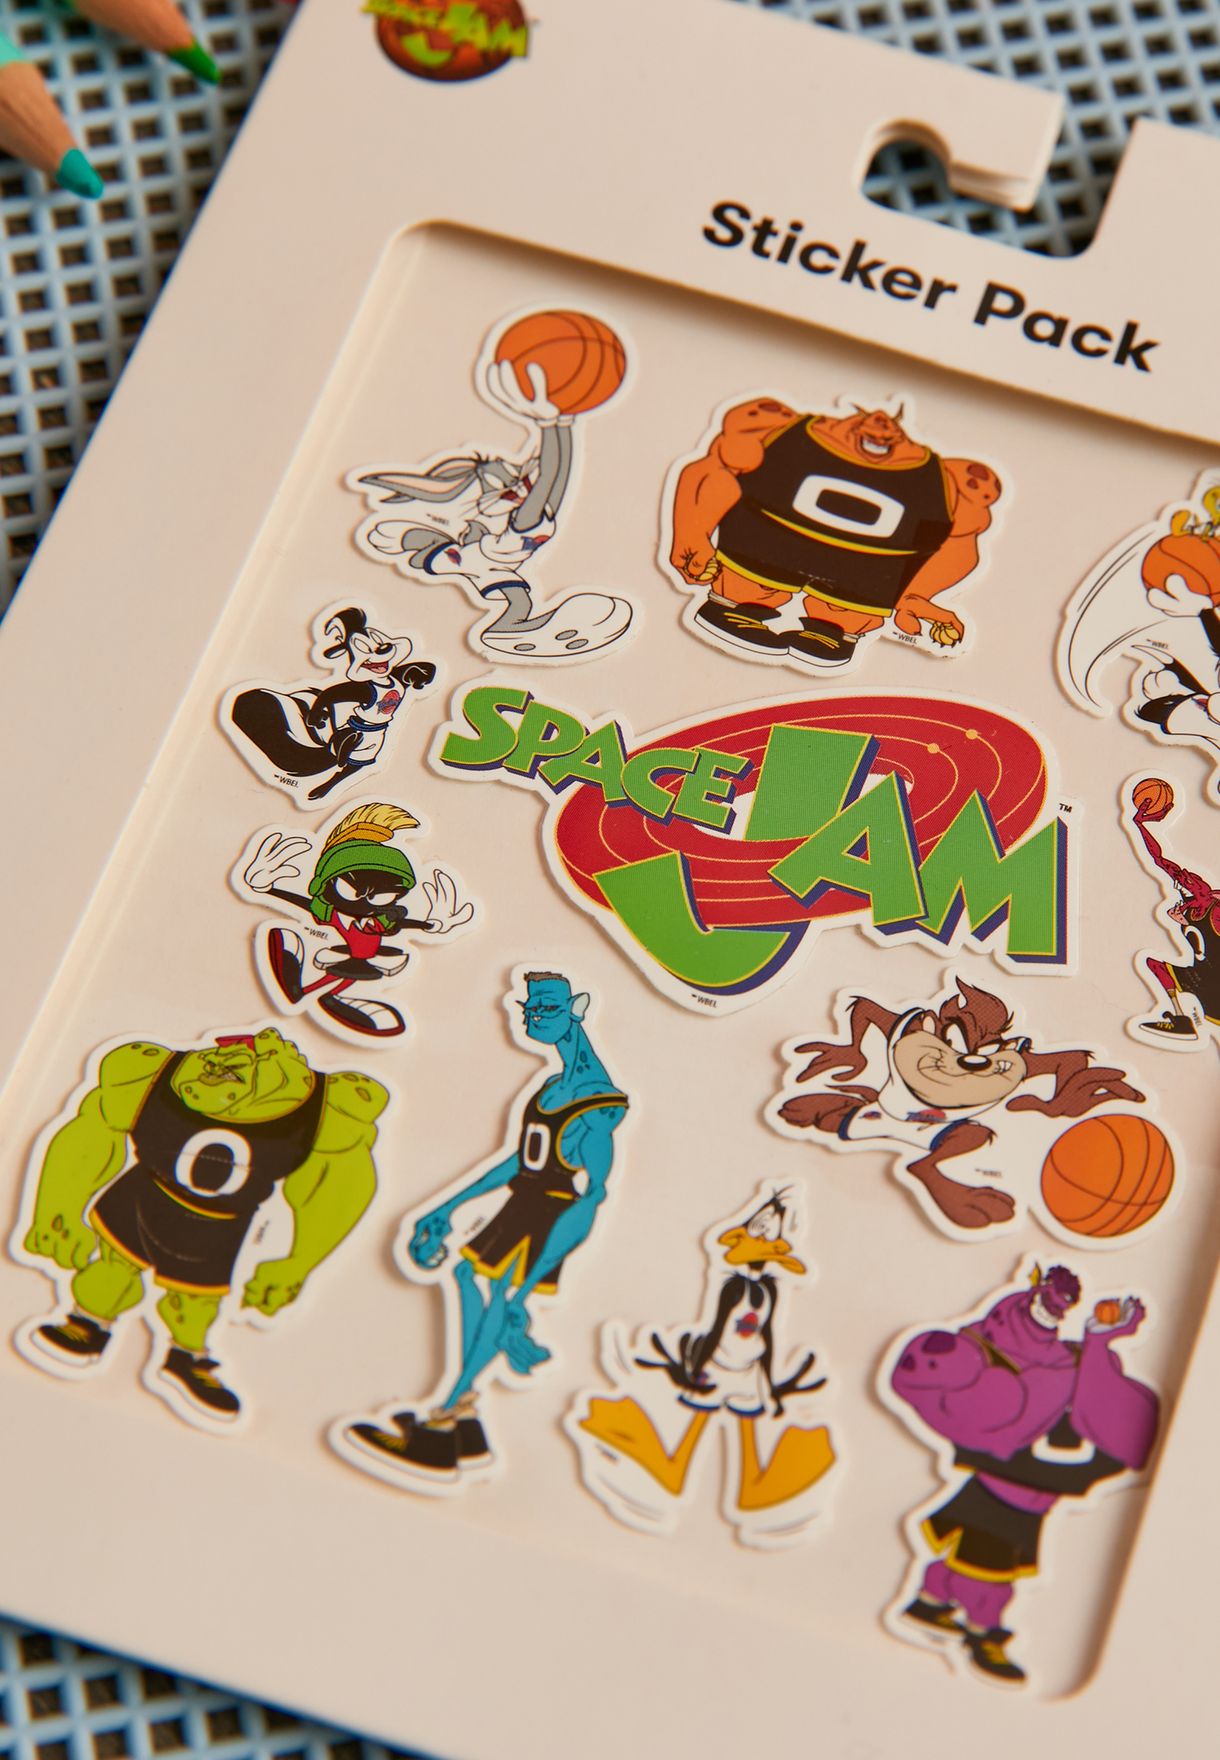 Space Jam Sticker Pack